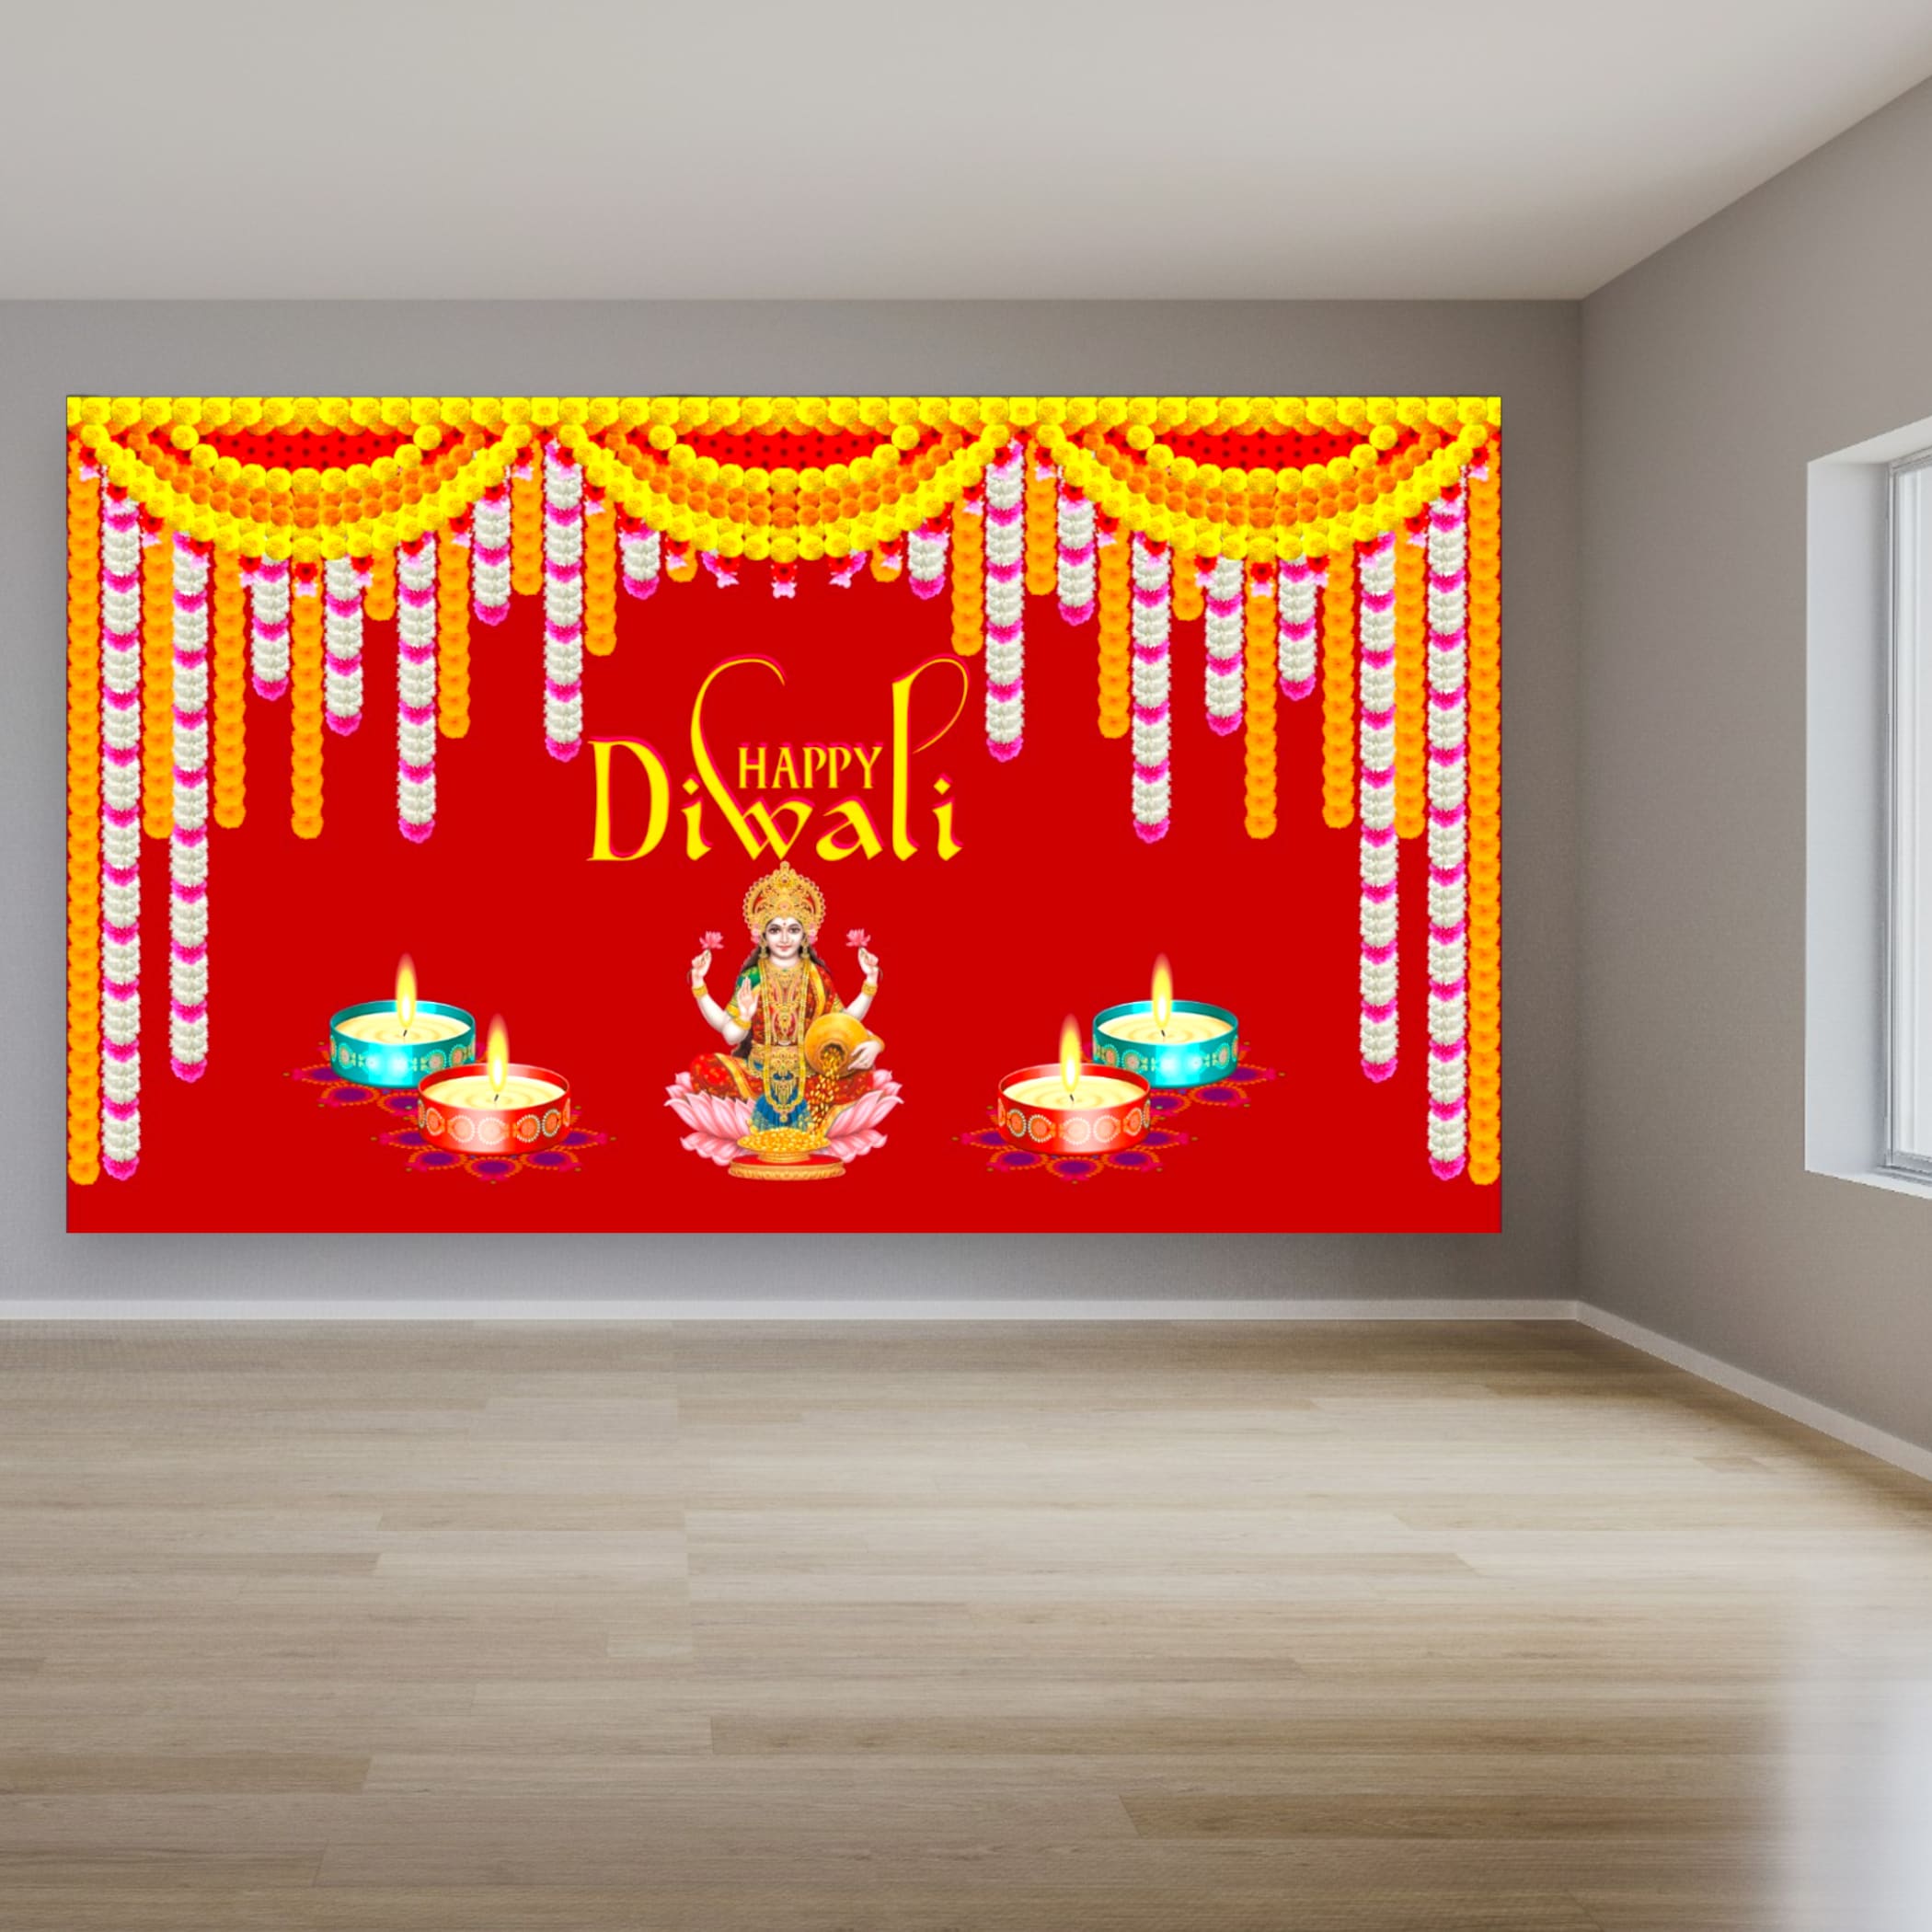 Happy diwali banner decoration decor backdrop cloth indian